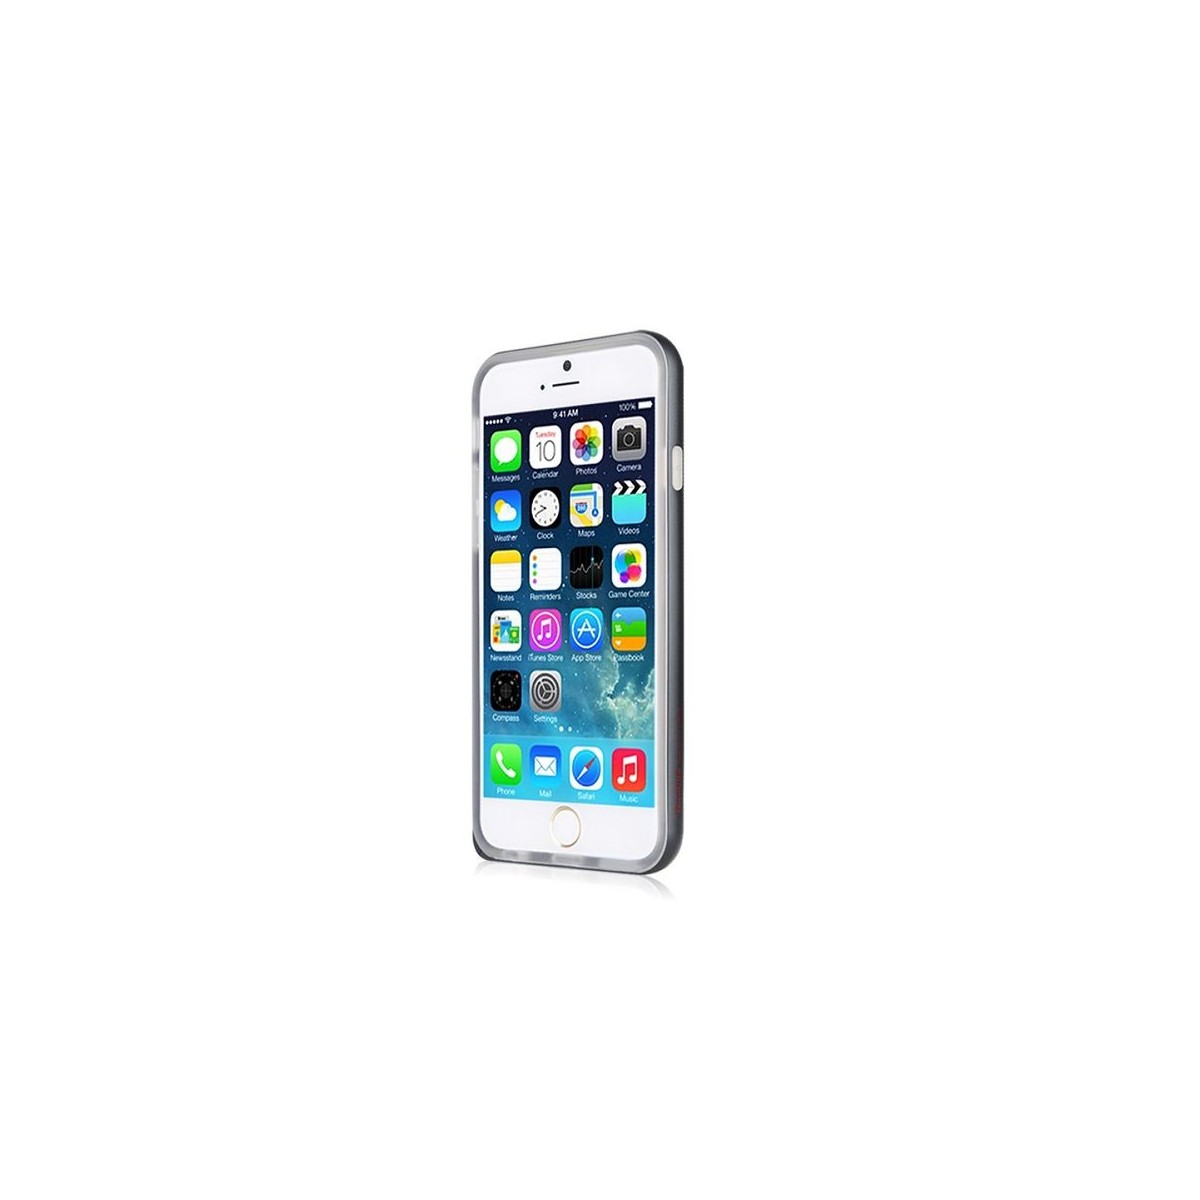 Coque iPhone 6 / 6s Transparente avec bumper noir - Baseus